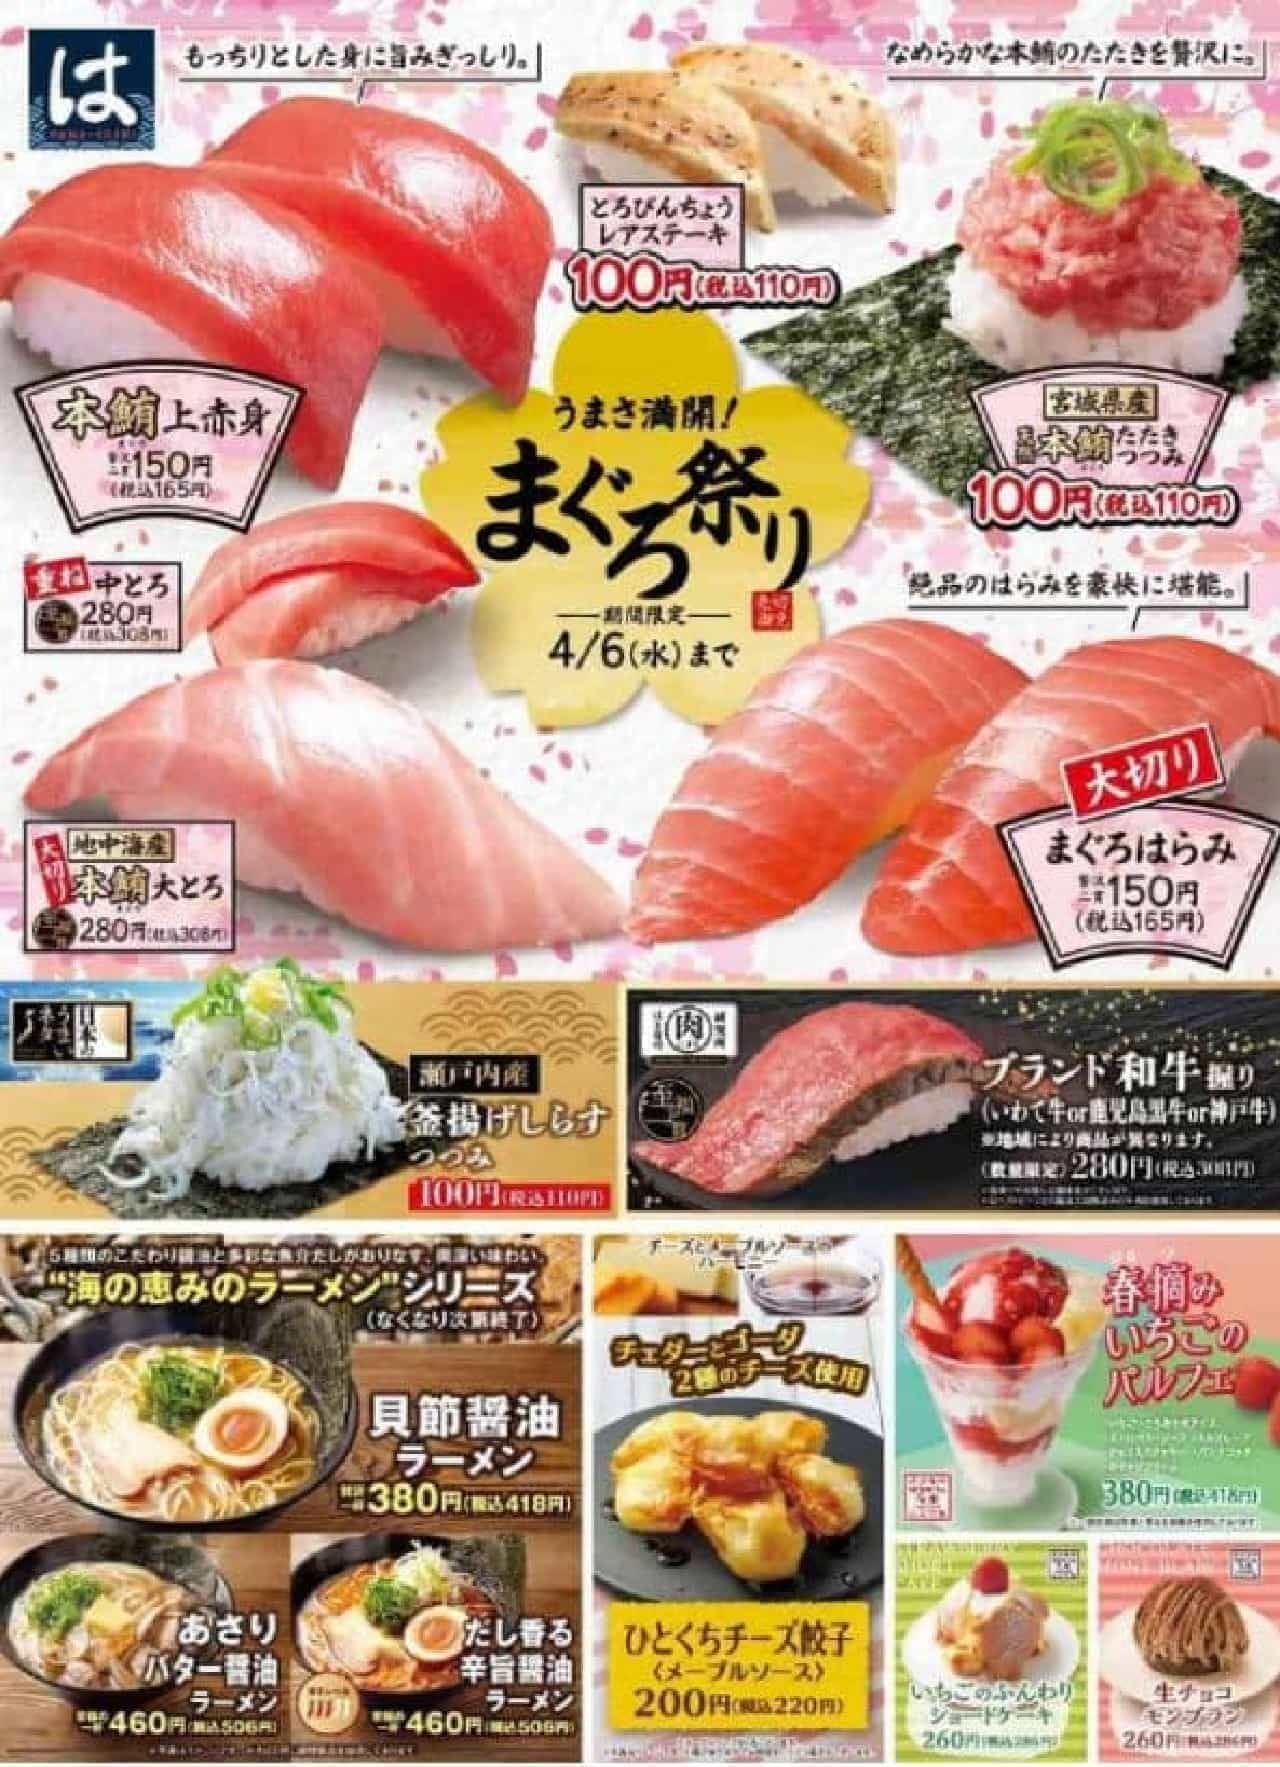 Hama Sushi "Umami in Full Bloom! Tuna Festival